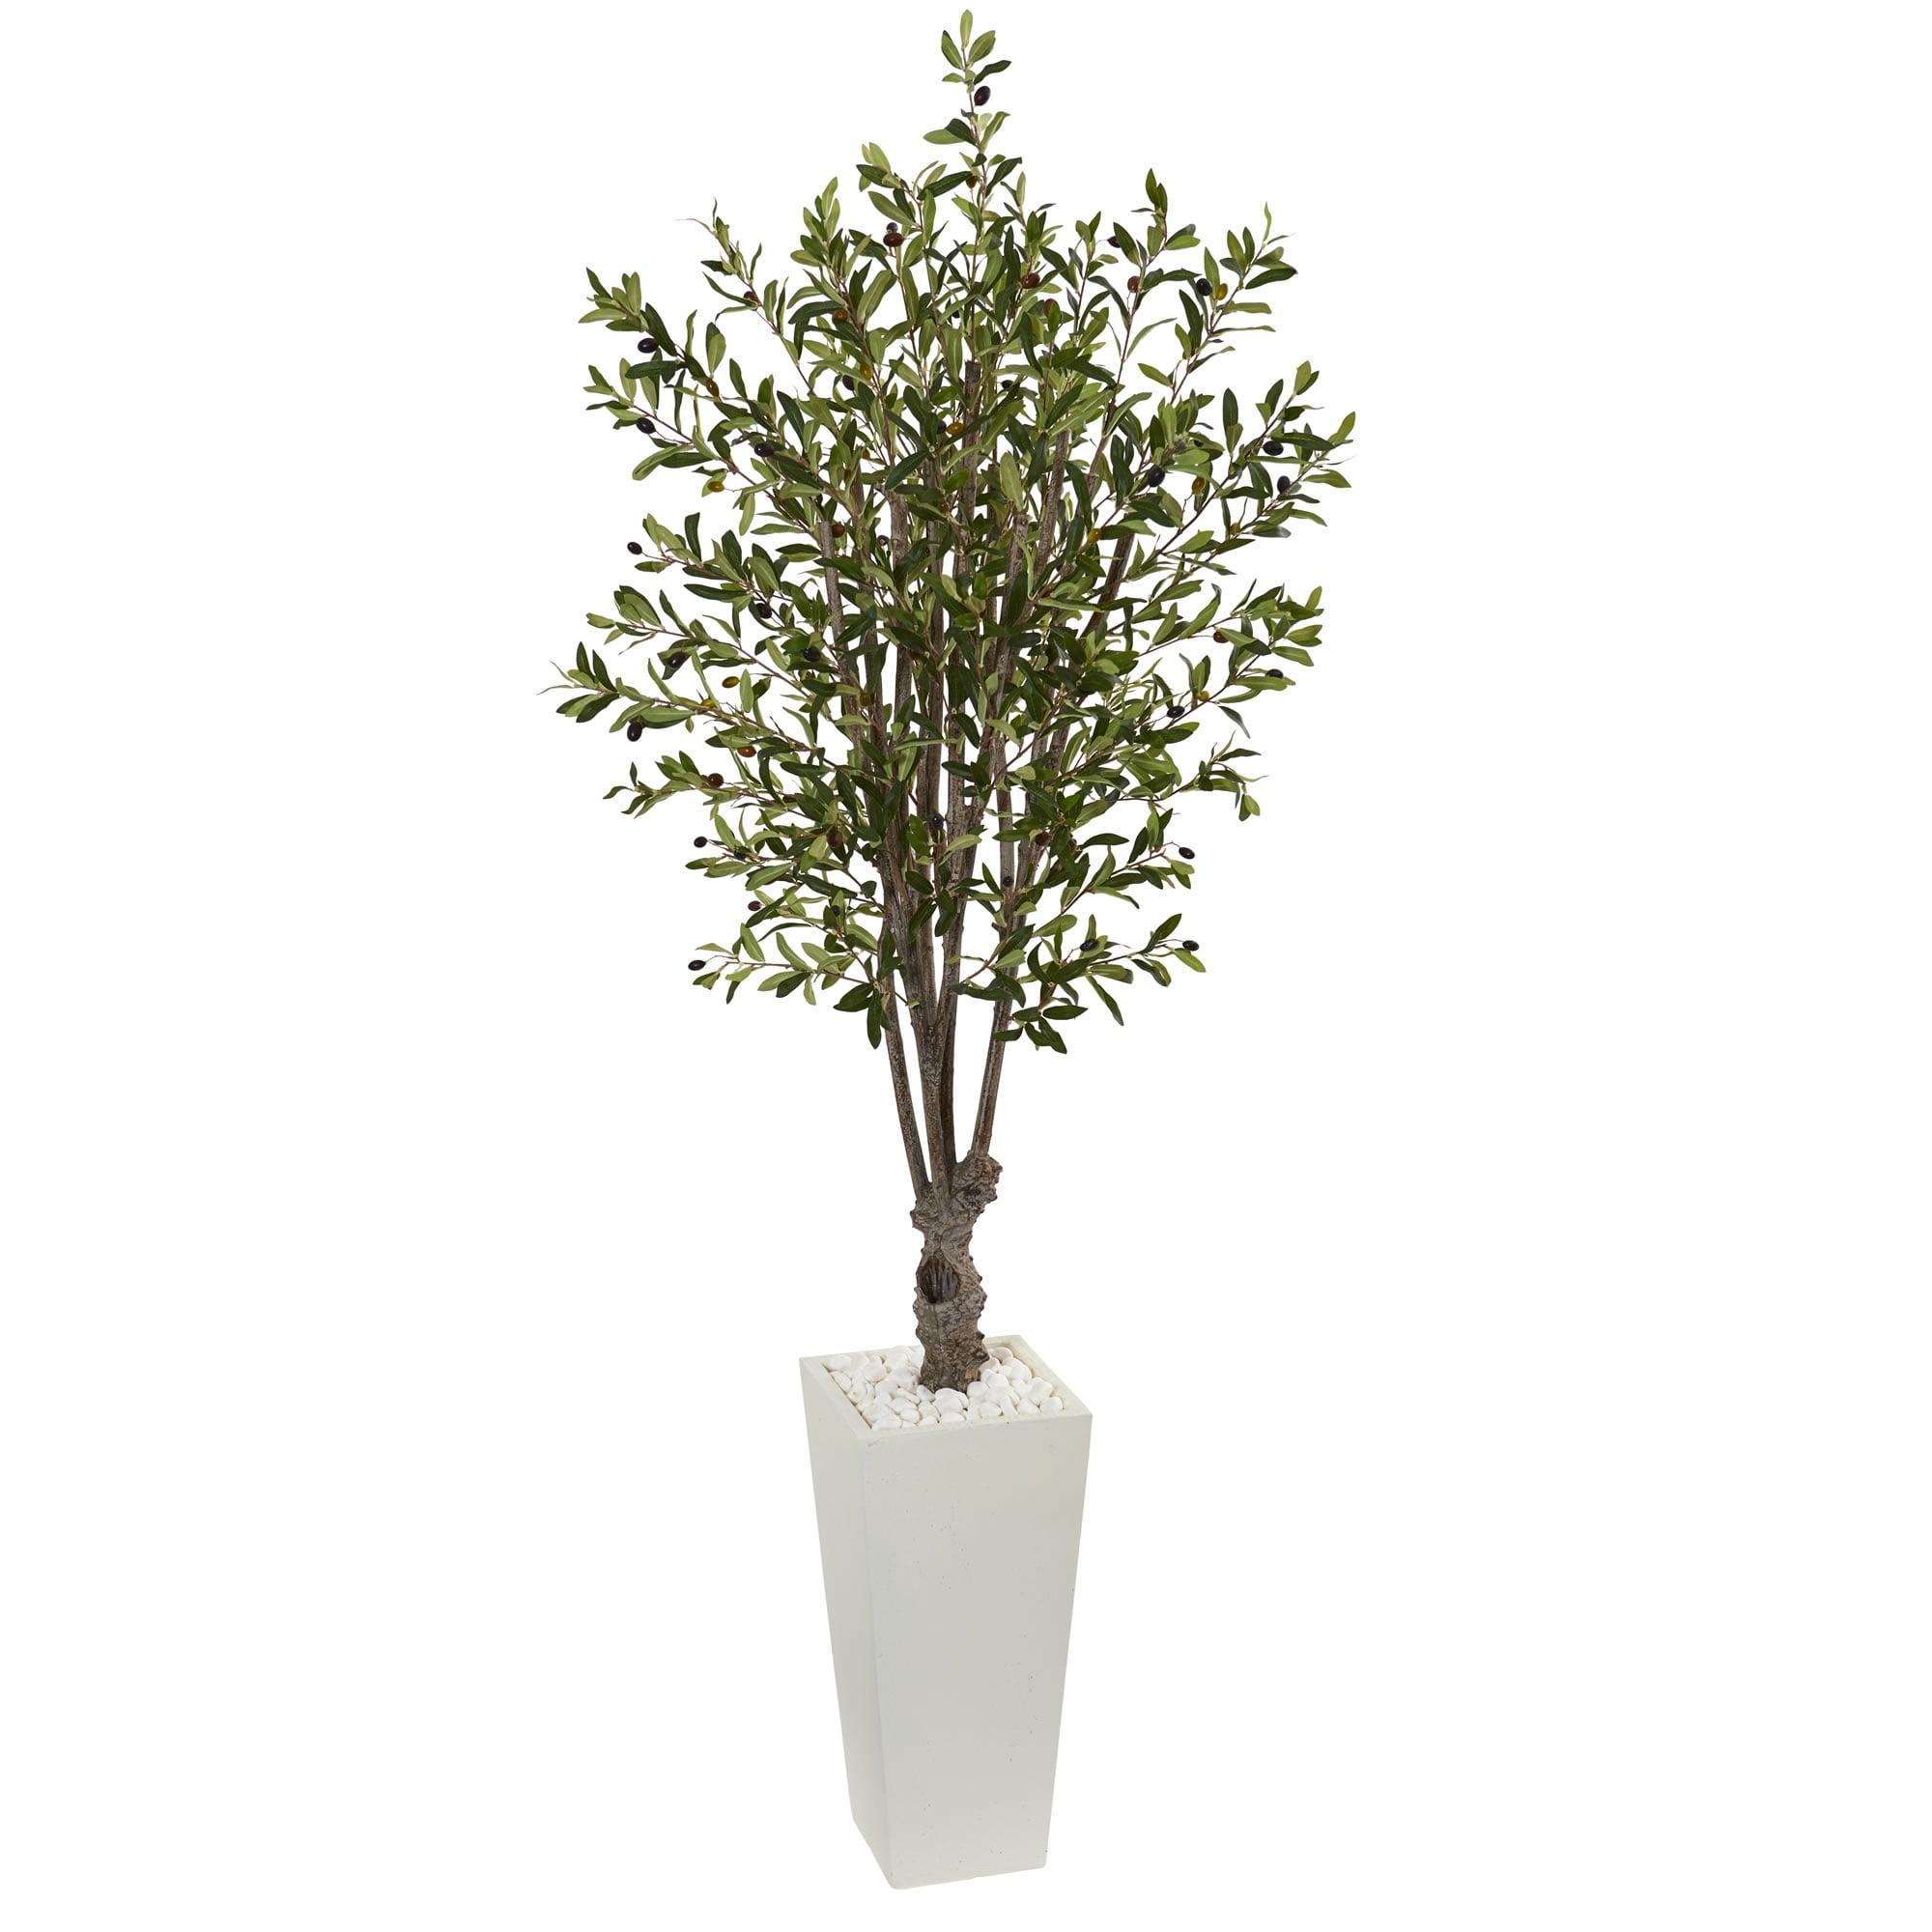 Mediterranean Elegance 6' Faux Olive Tree in White Tower Planter